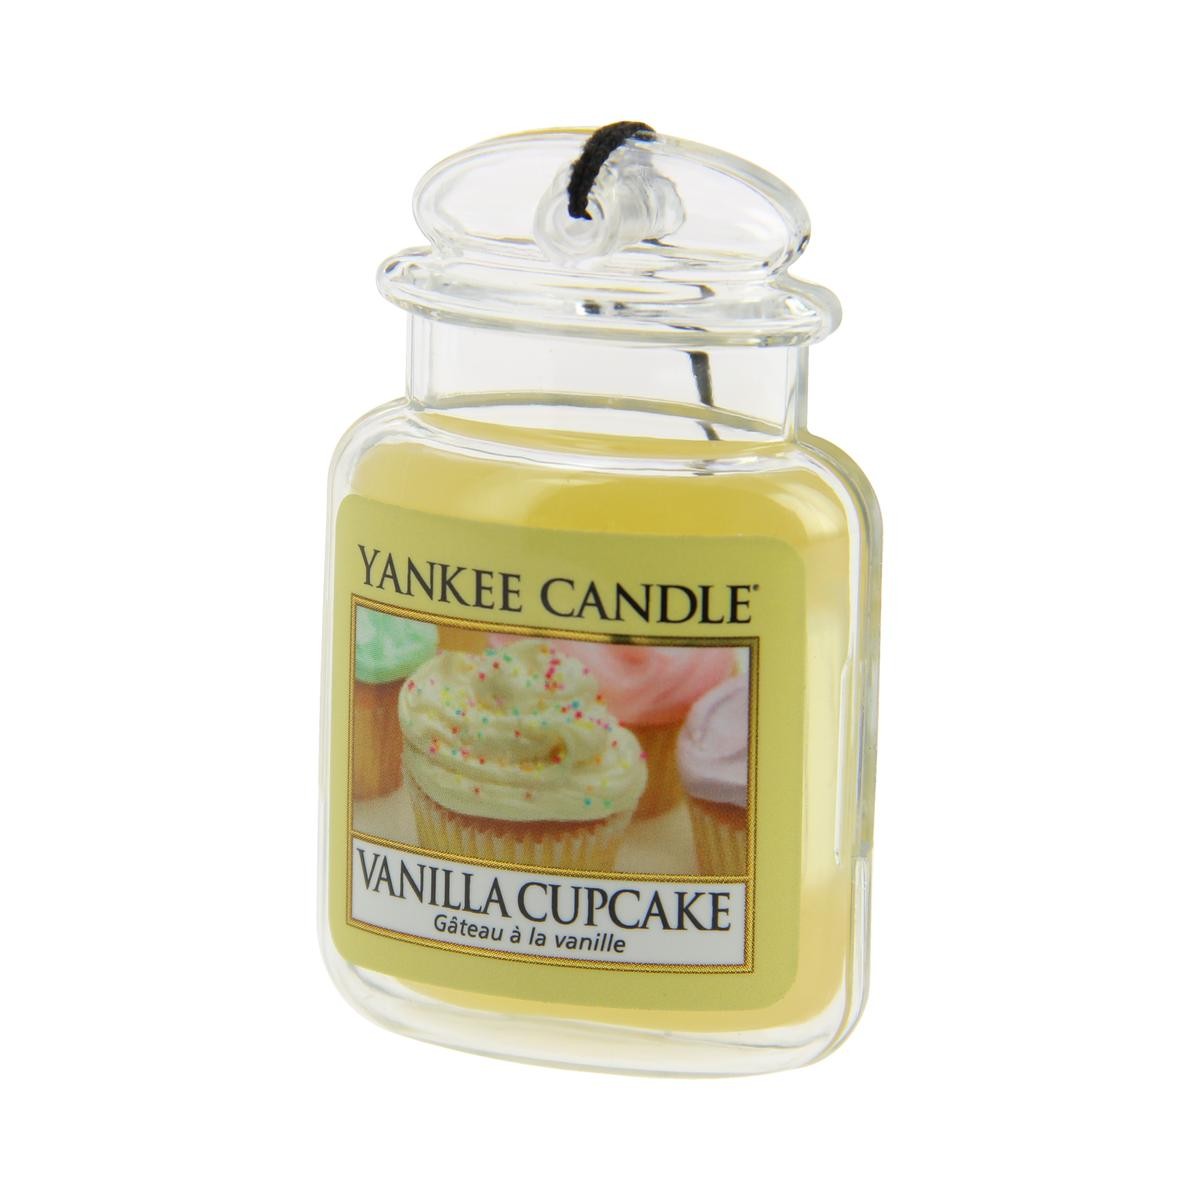 Yankee Candle Autoduft Vanilla Cupcake Car Jar